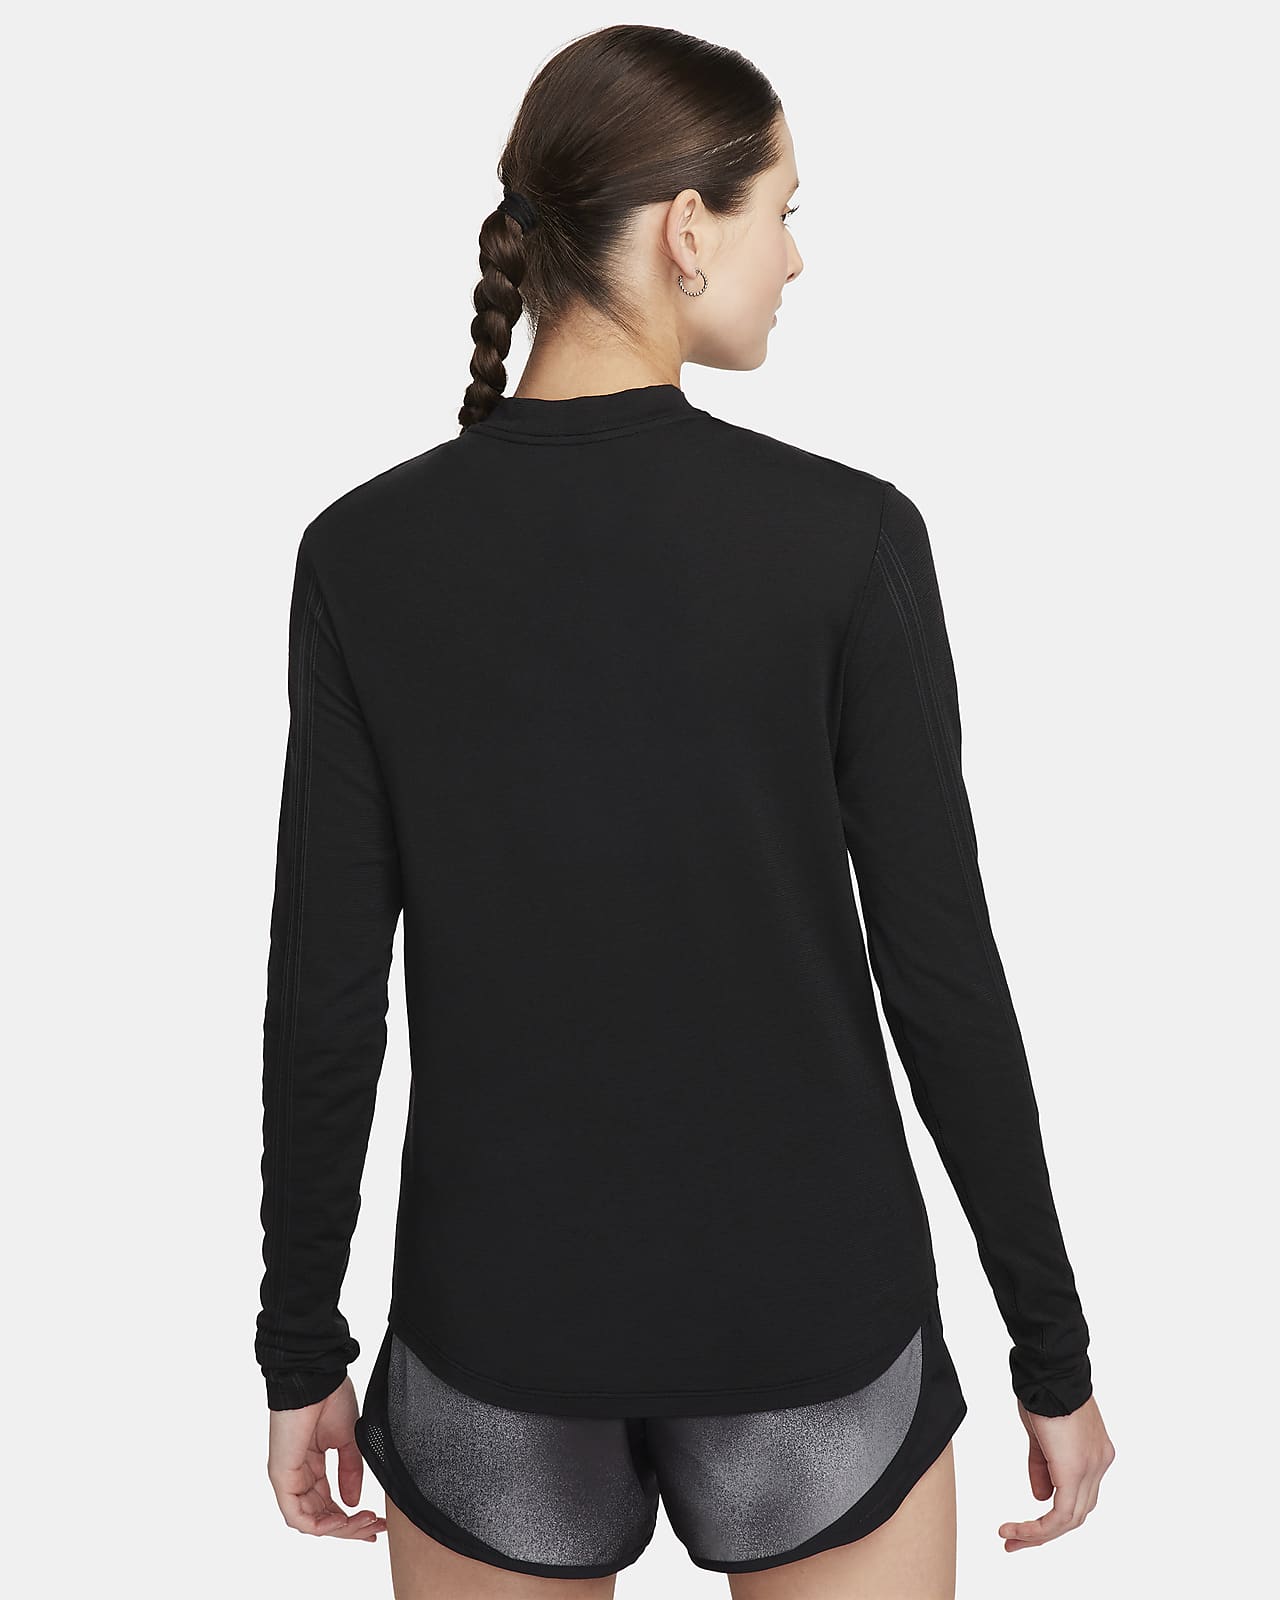 Nike Long-Sleeve Mock Neck Shirt Grey